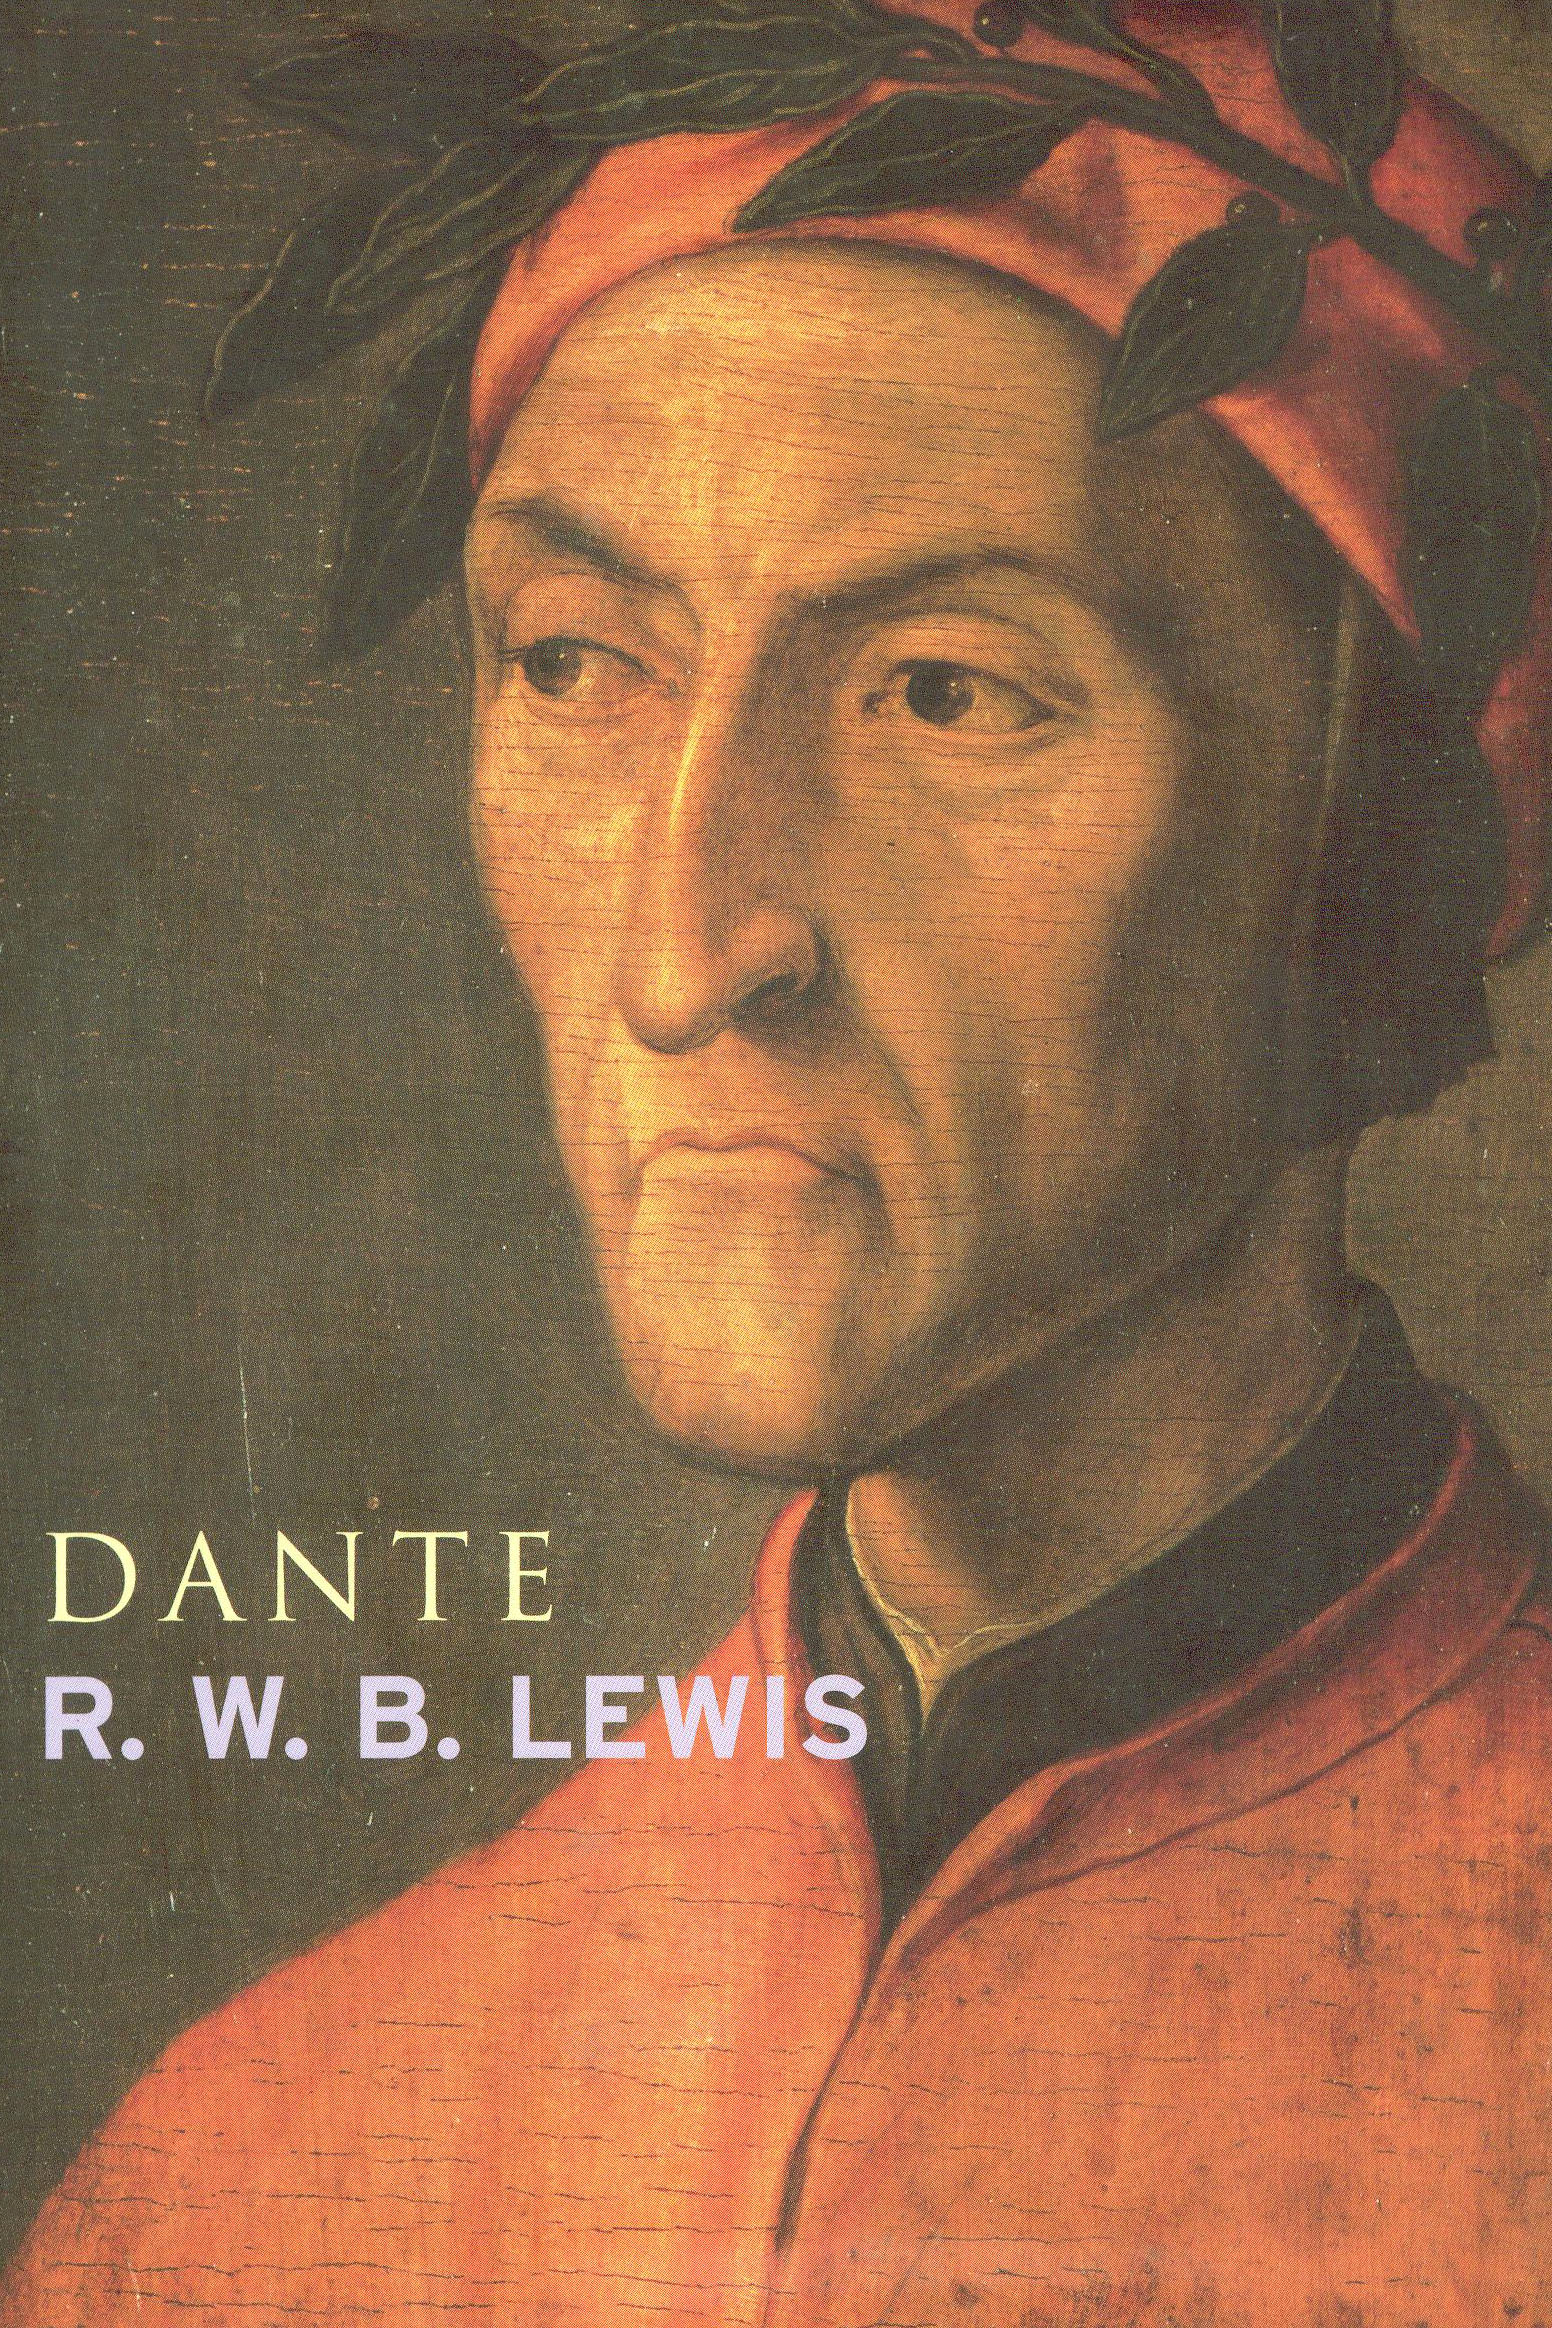 the author quotes Dantes